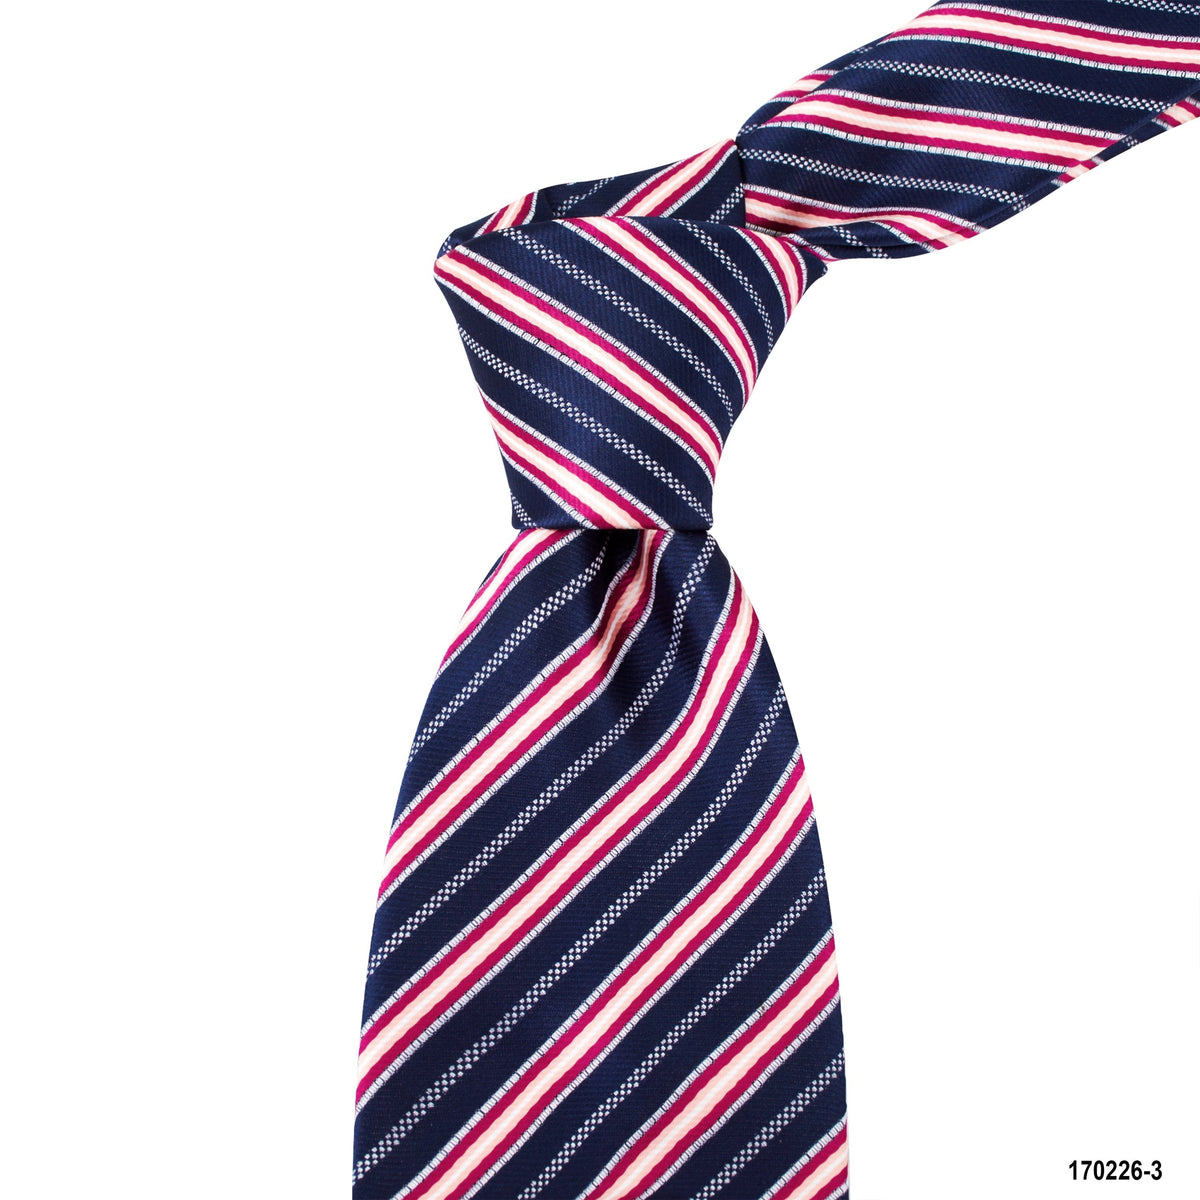 MarZthomson 8cm Intricate Stripes Tie in Navy and Red J-Cufflinks.com.sg | Neckties.com.sg